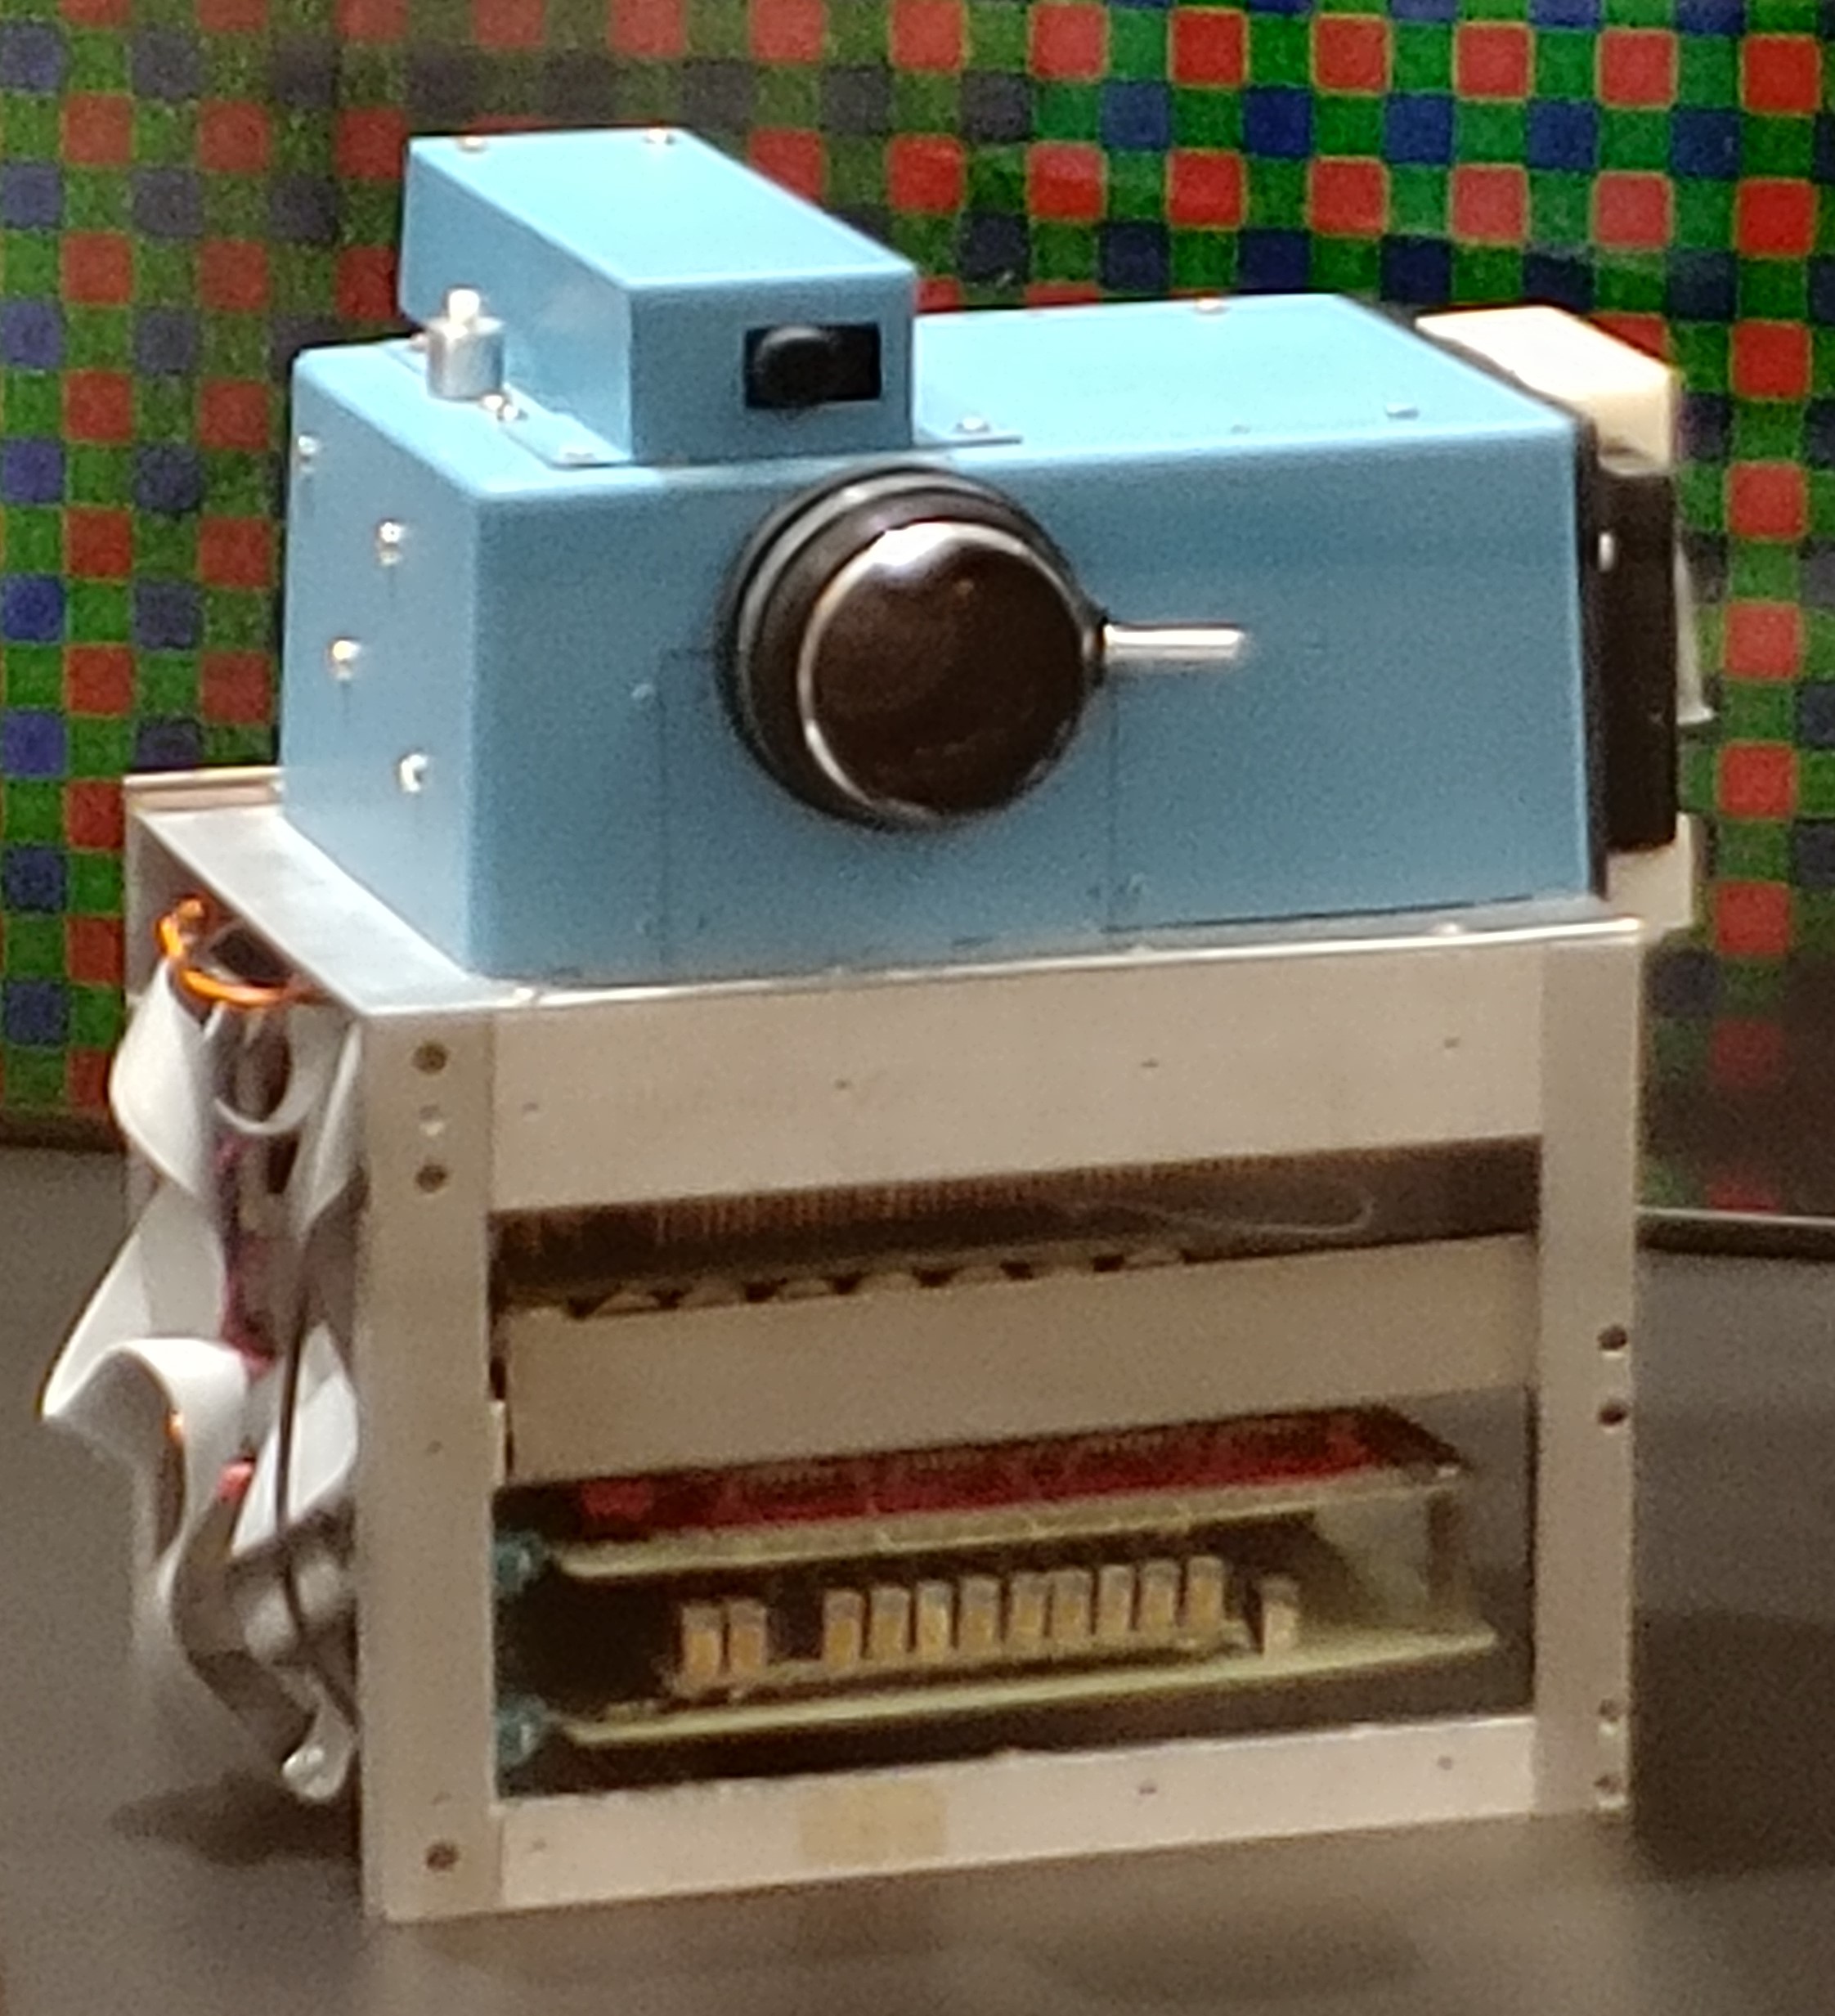 First Handheld Digital Camera